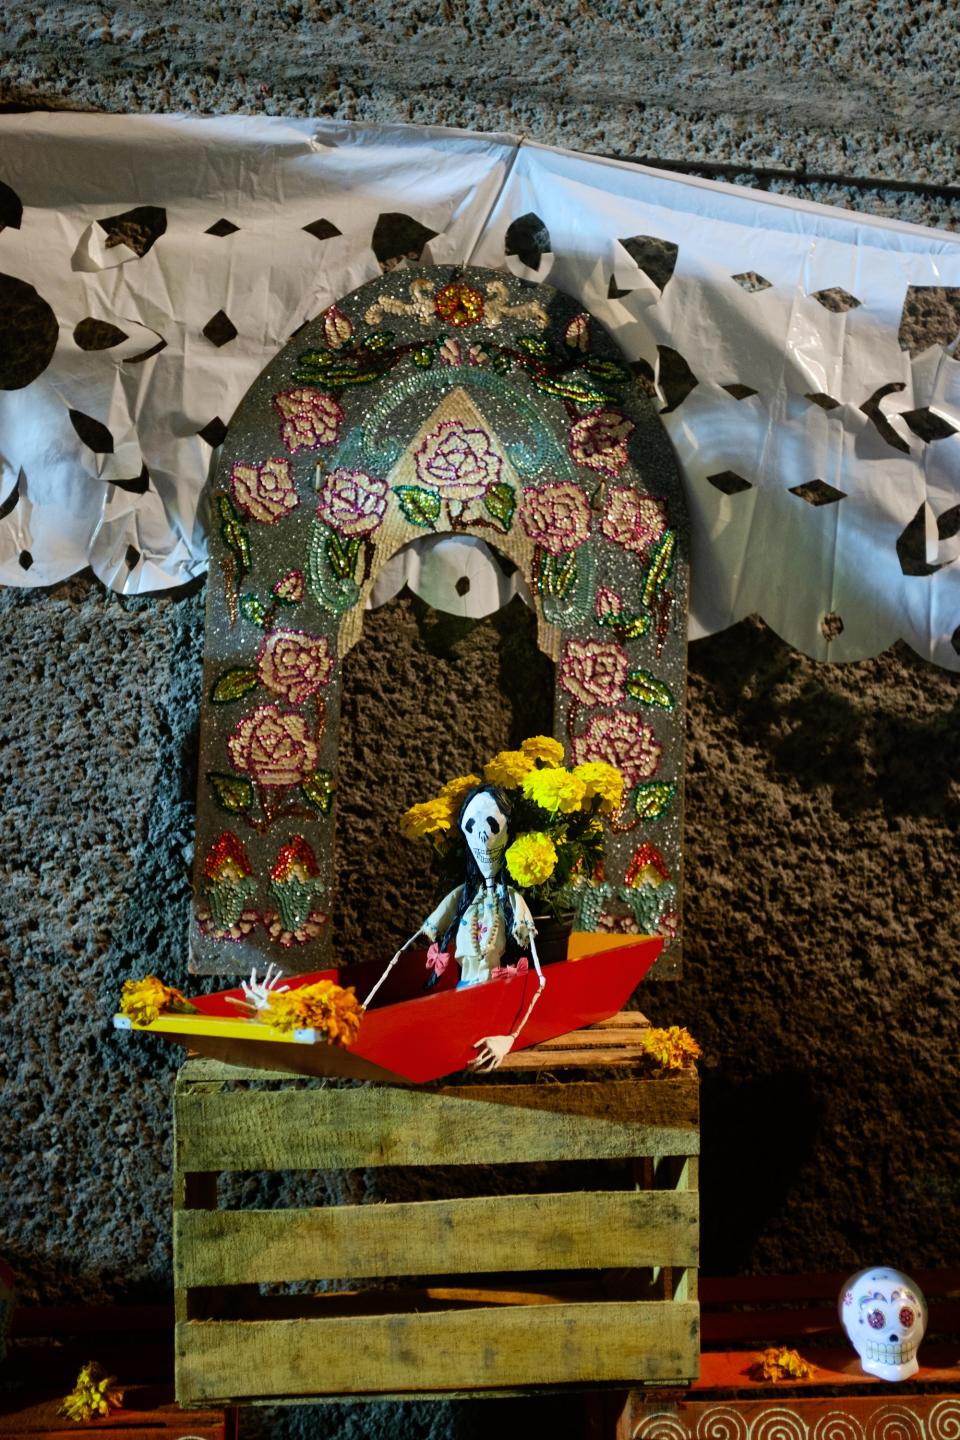 A representative Xochimilco ofrenda—the Catrina sits in a trajinera, with the classic arch motif in the background.